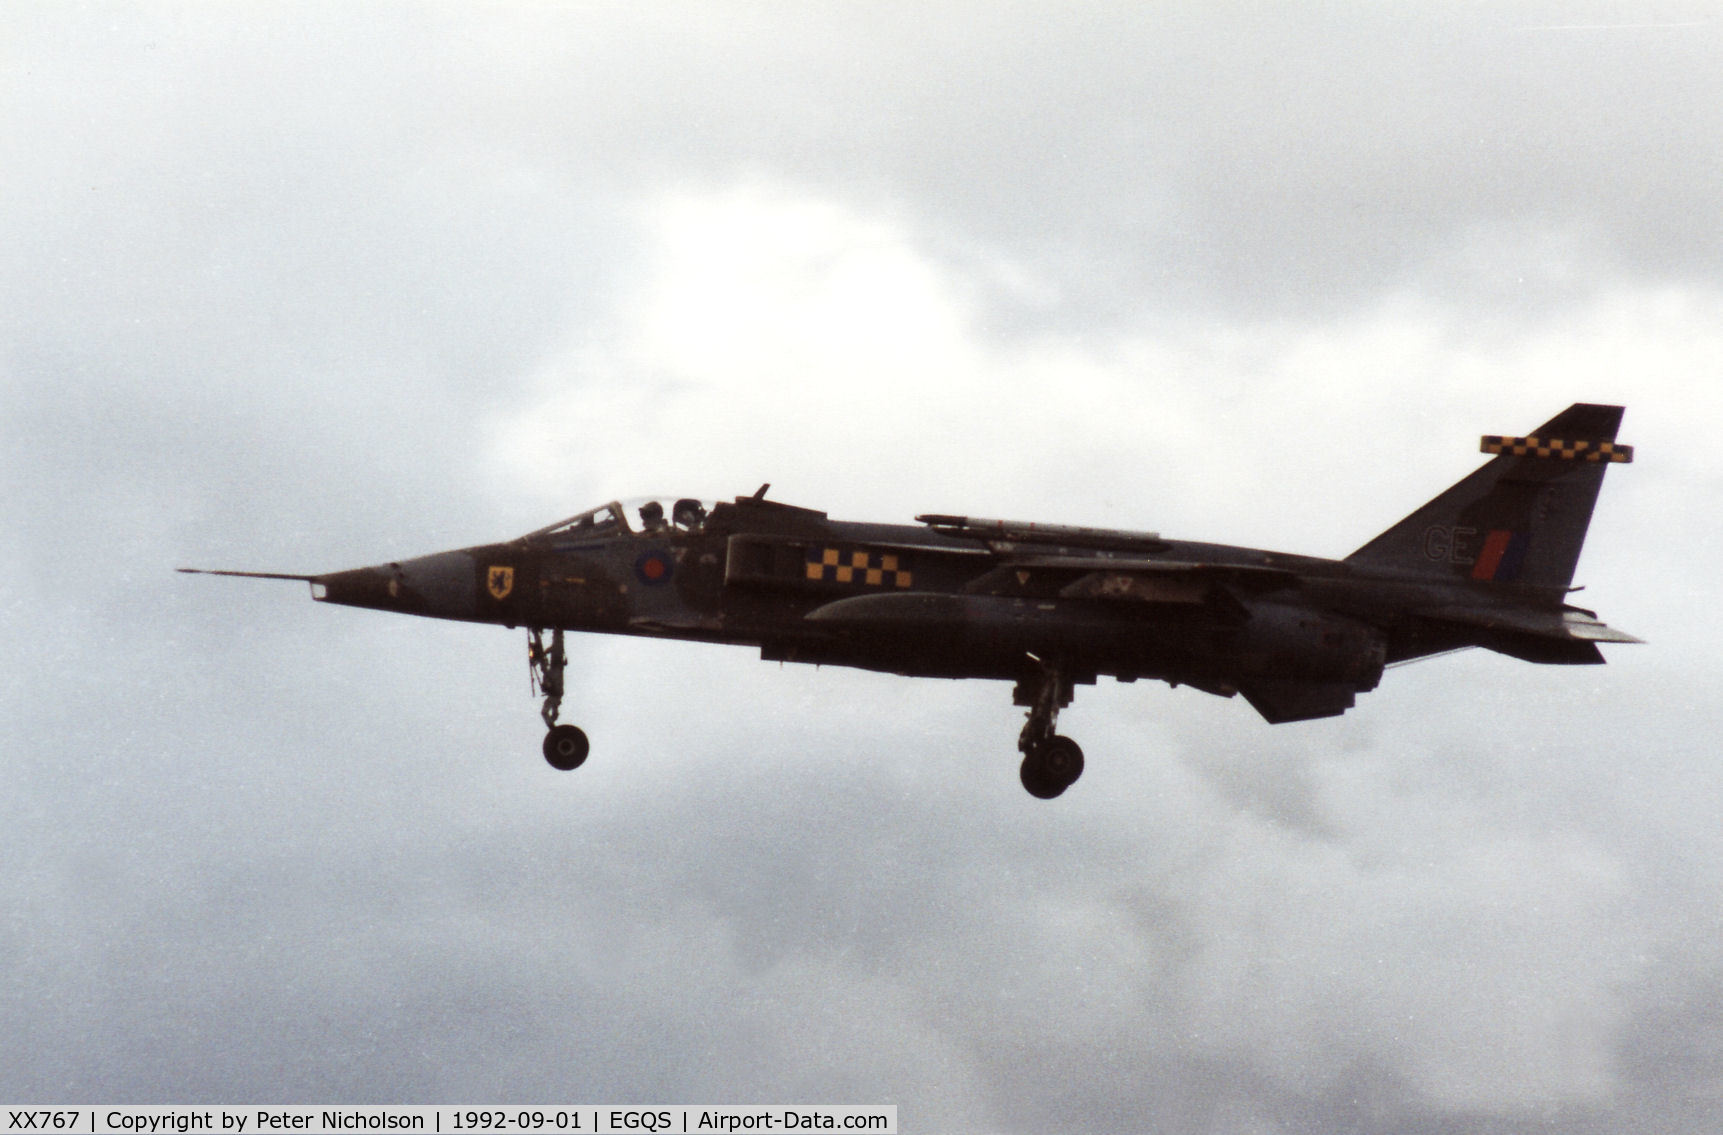 XX767, 1975 Sepecat Jaguar GR.1A C/N S.64, Jaguar GR.1A of 54 Squadron based at RAF Coltishall landing at RAF Lossiemouth in September 1992.